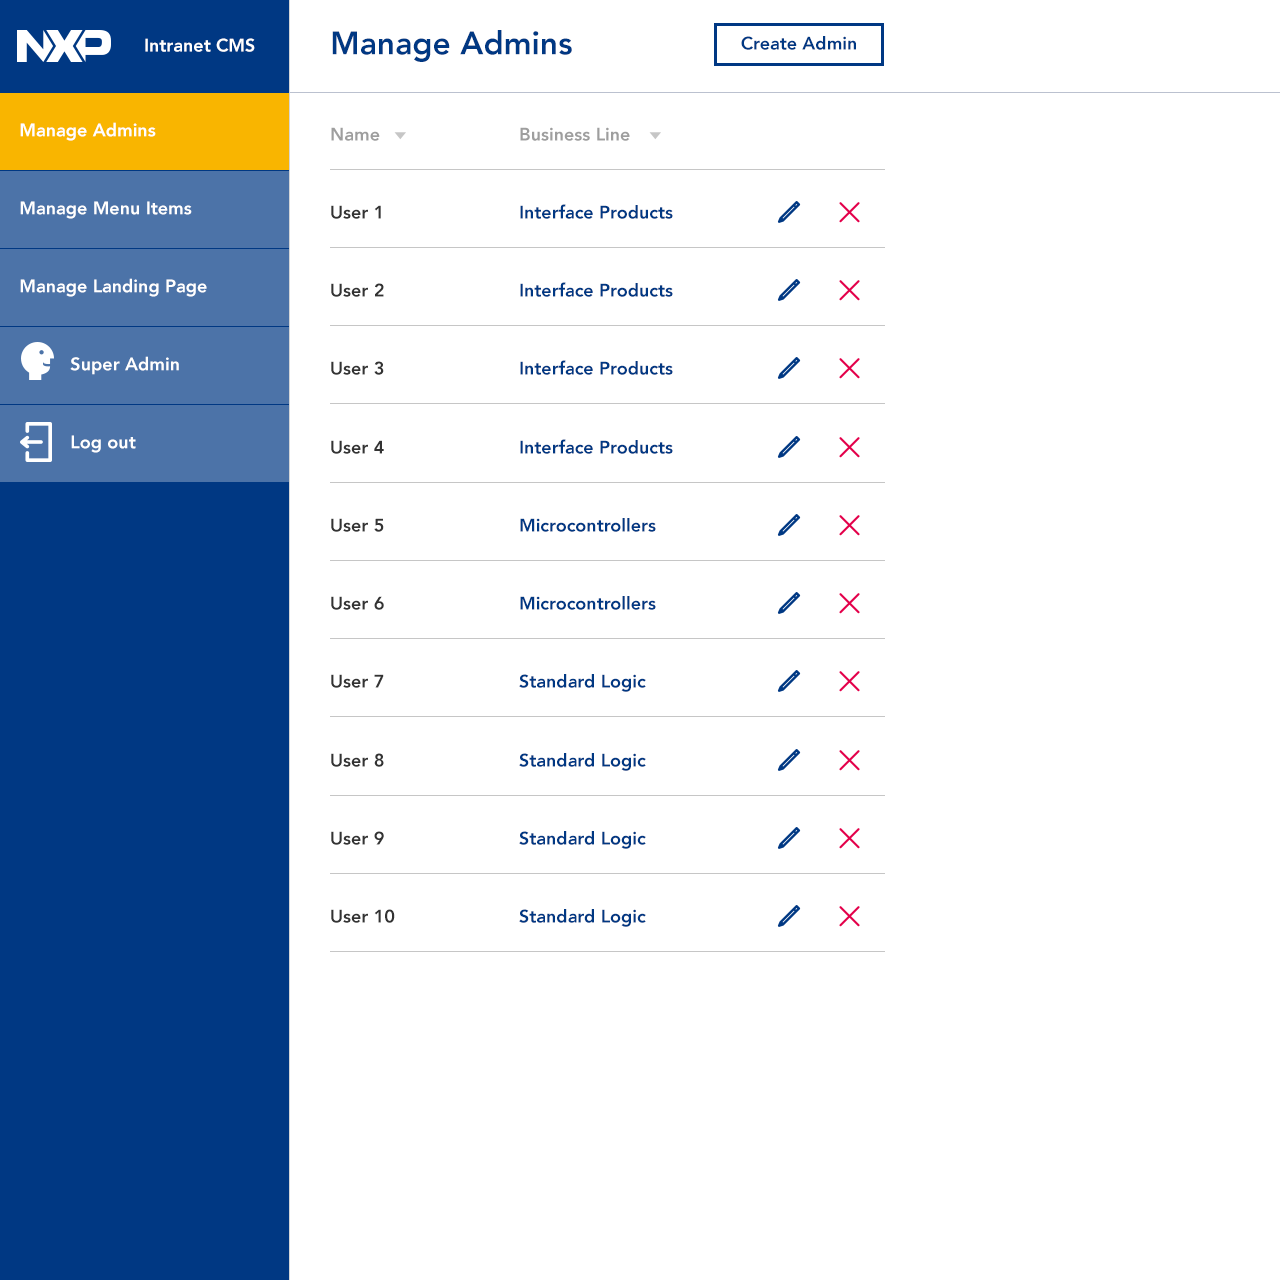 NXP Intranet